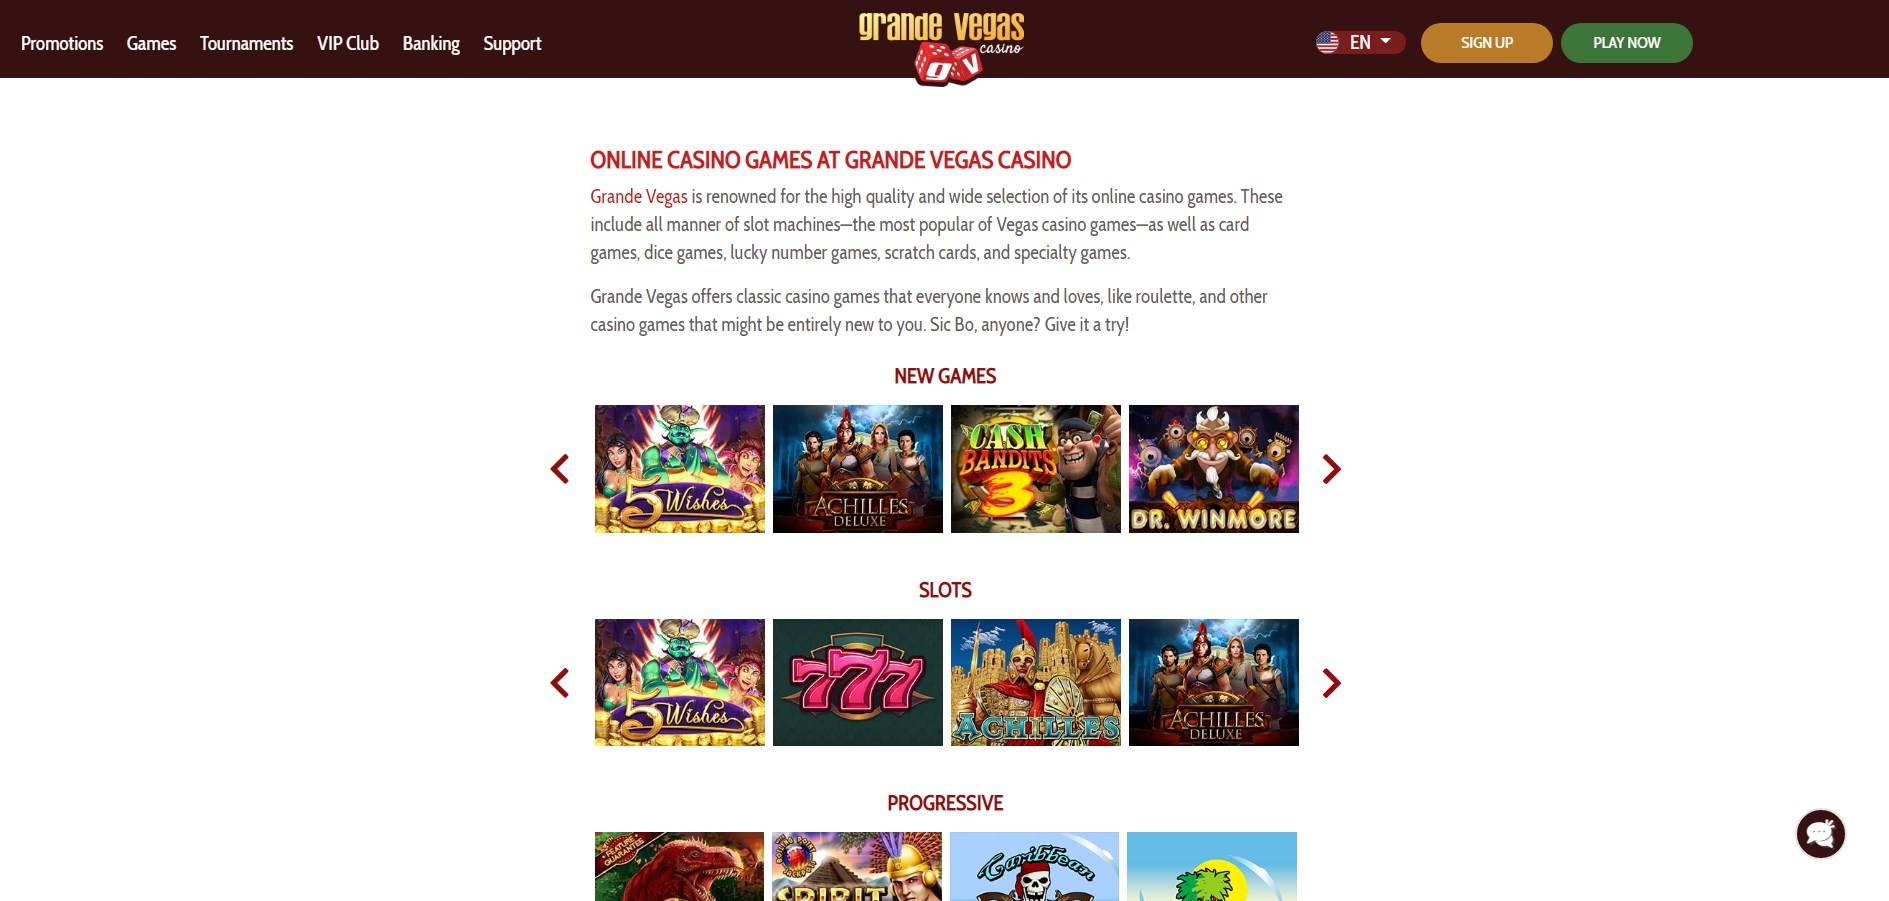 Grande Vegas Casino Games